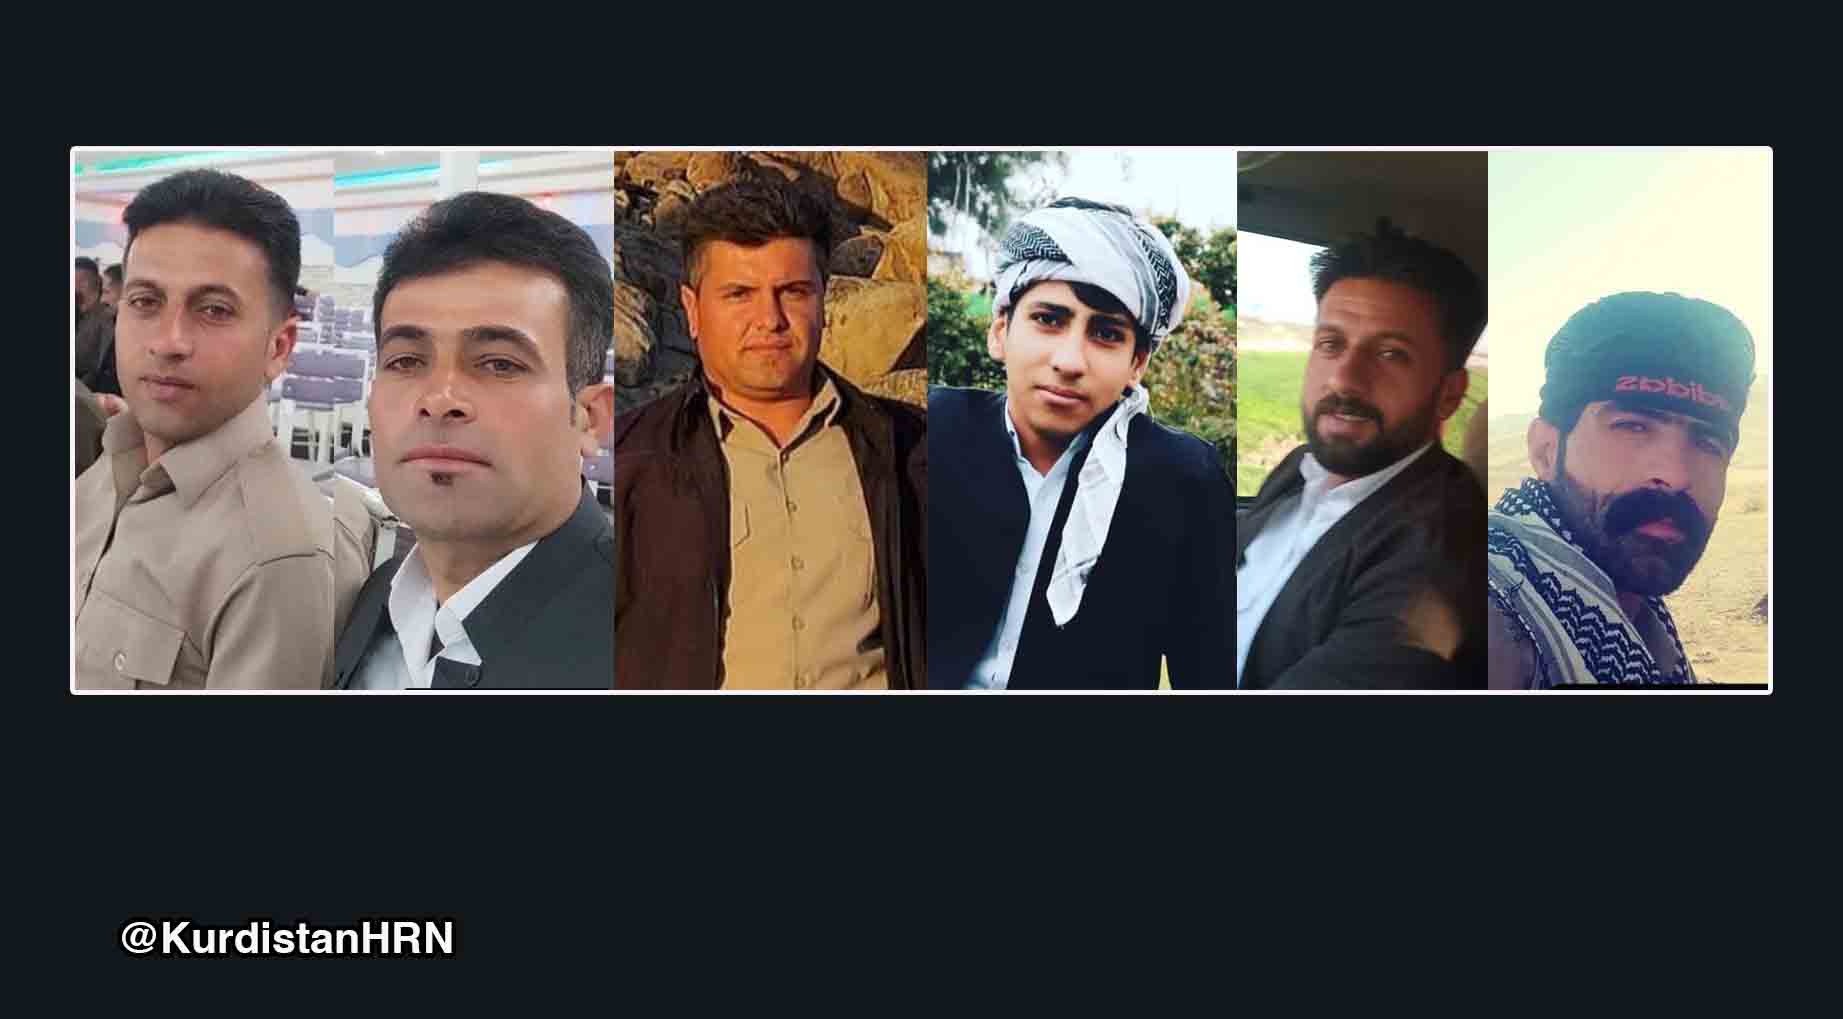 Habib Khoshnoud, Abdorrahman Gheytaran, Jamal Rasoulzadeh, Mohammad Mahmoud Feqh, Khezr Mohammadpour, Sadraddin Gheytaran